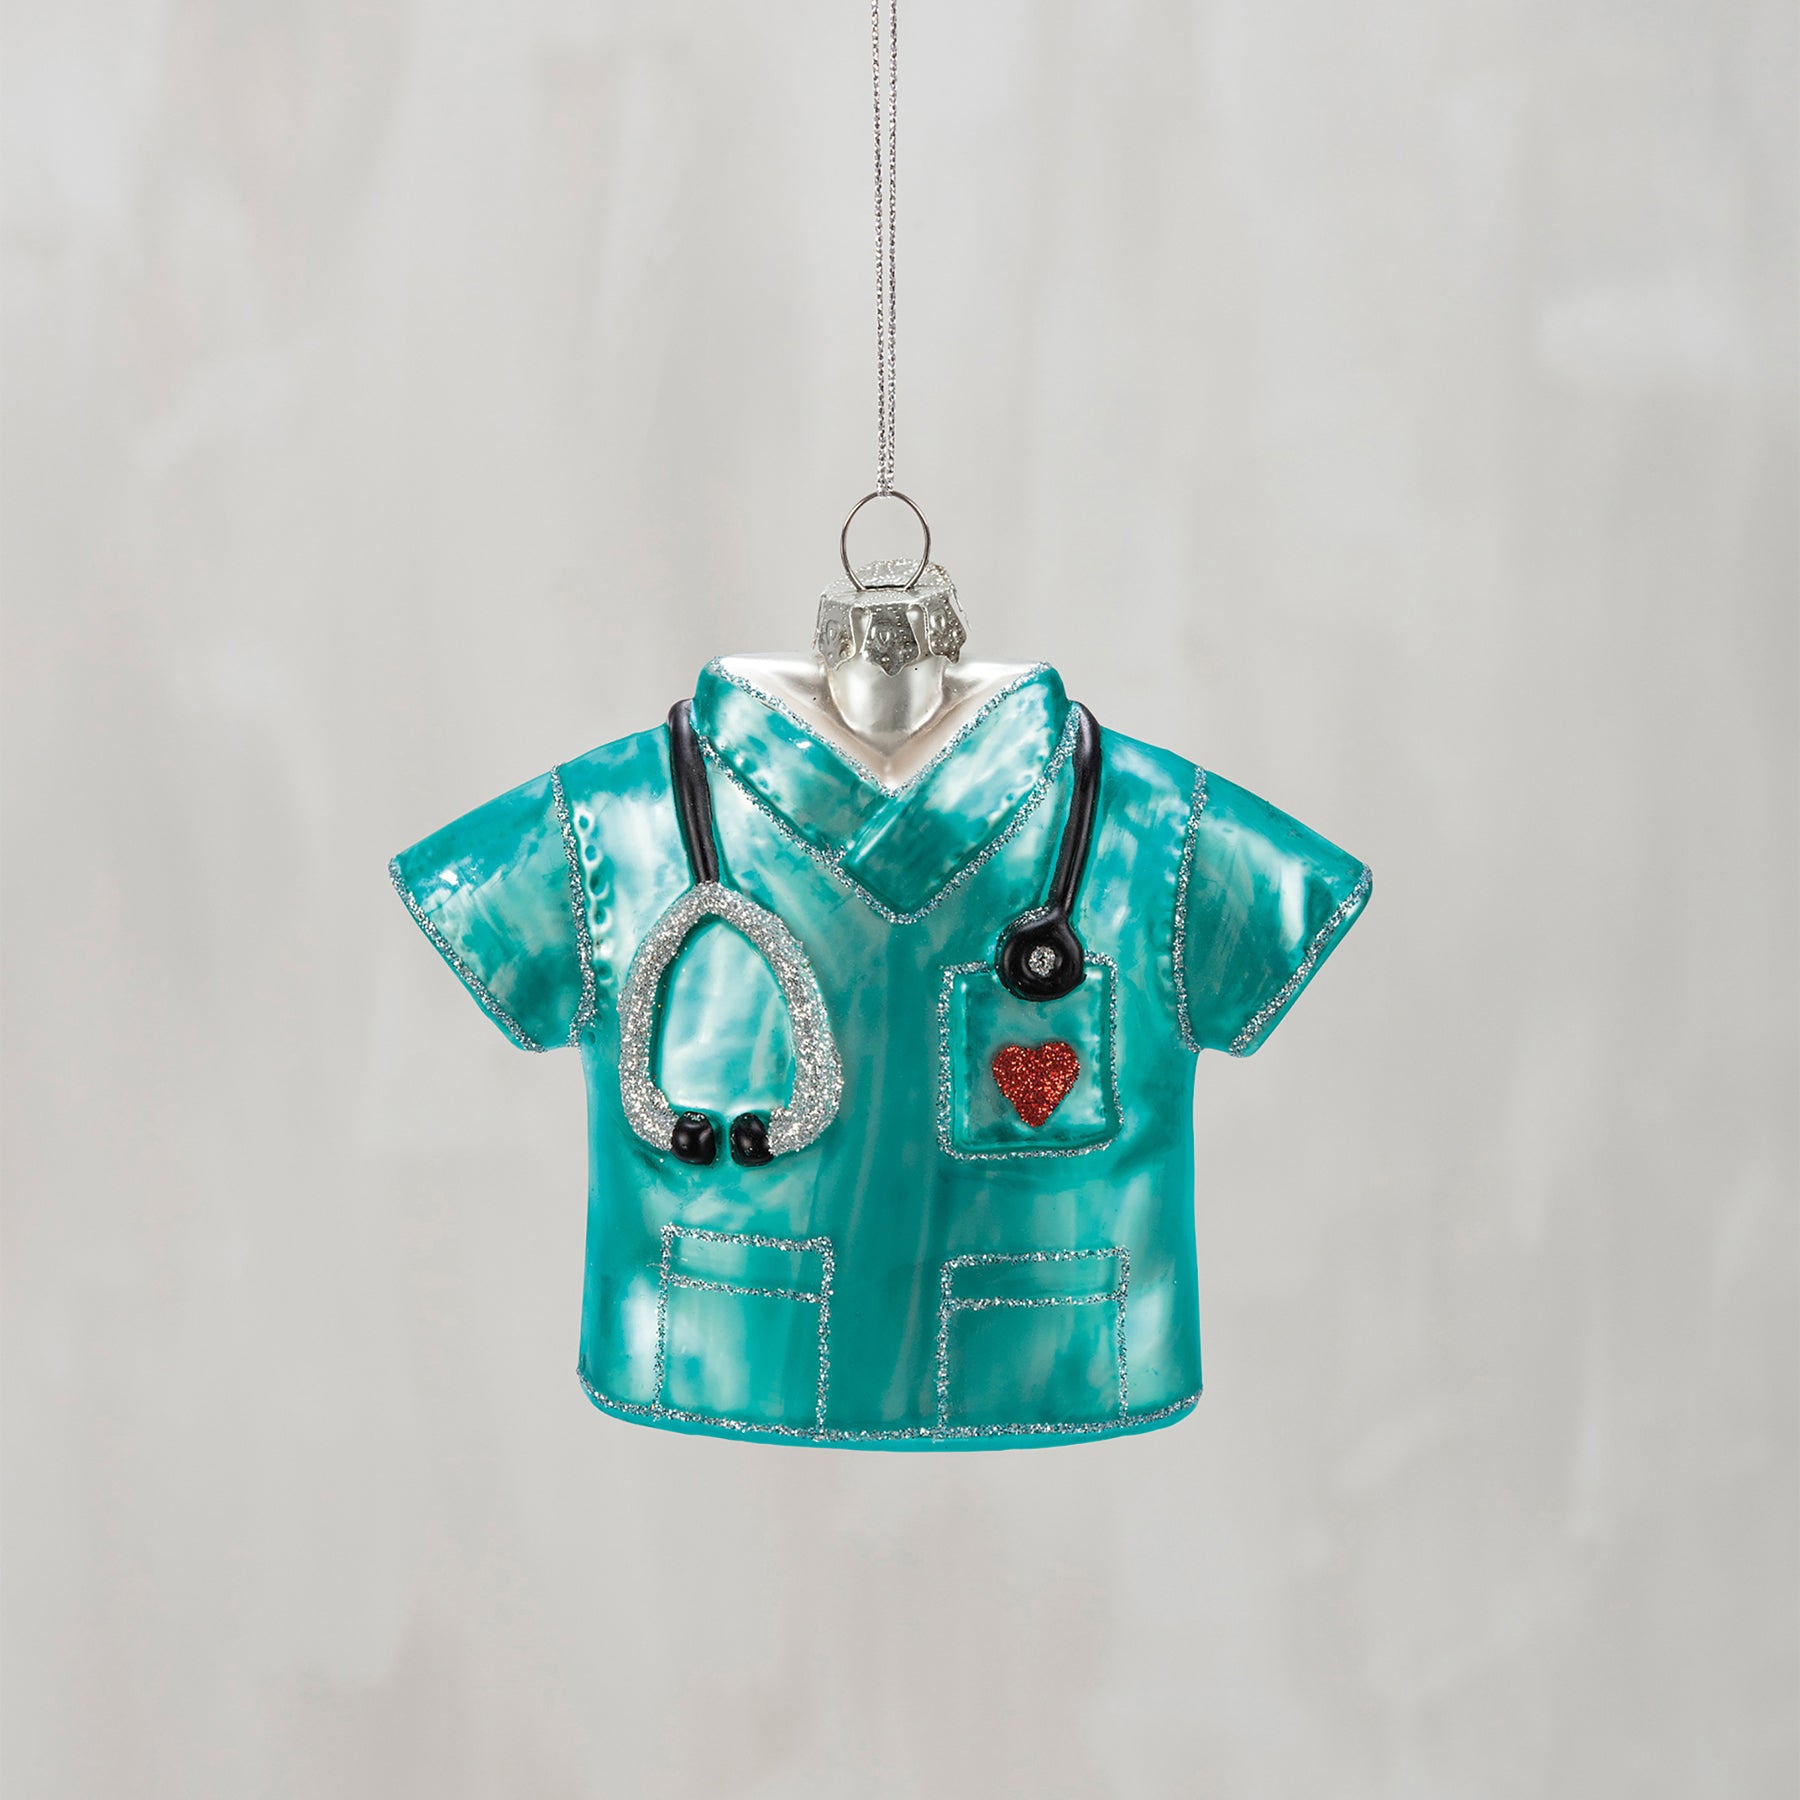 Nurse Scrubs Glass Ornament